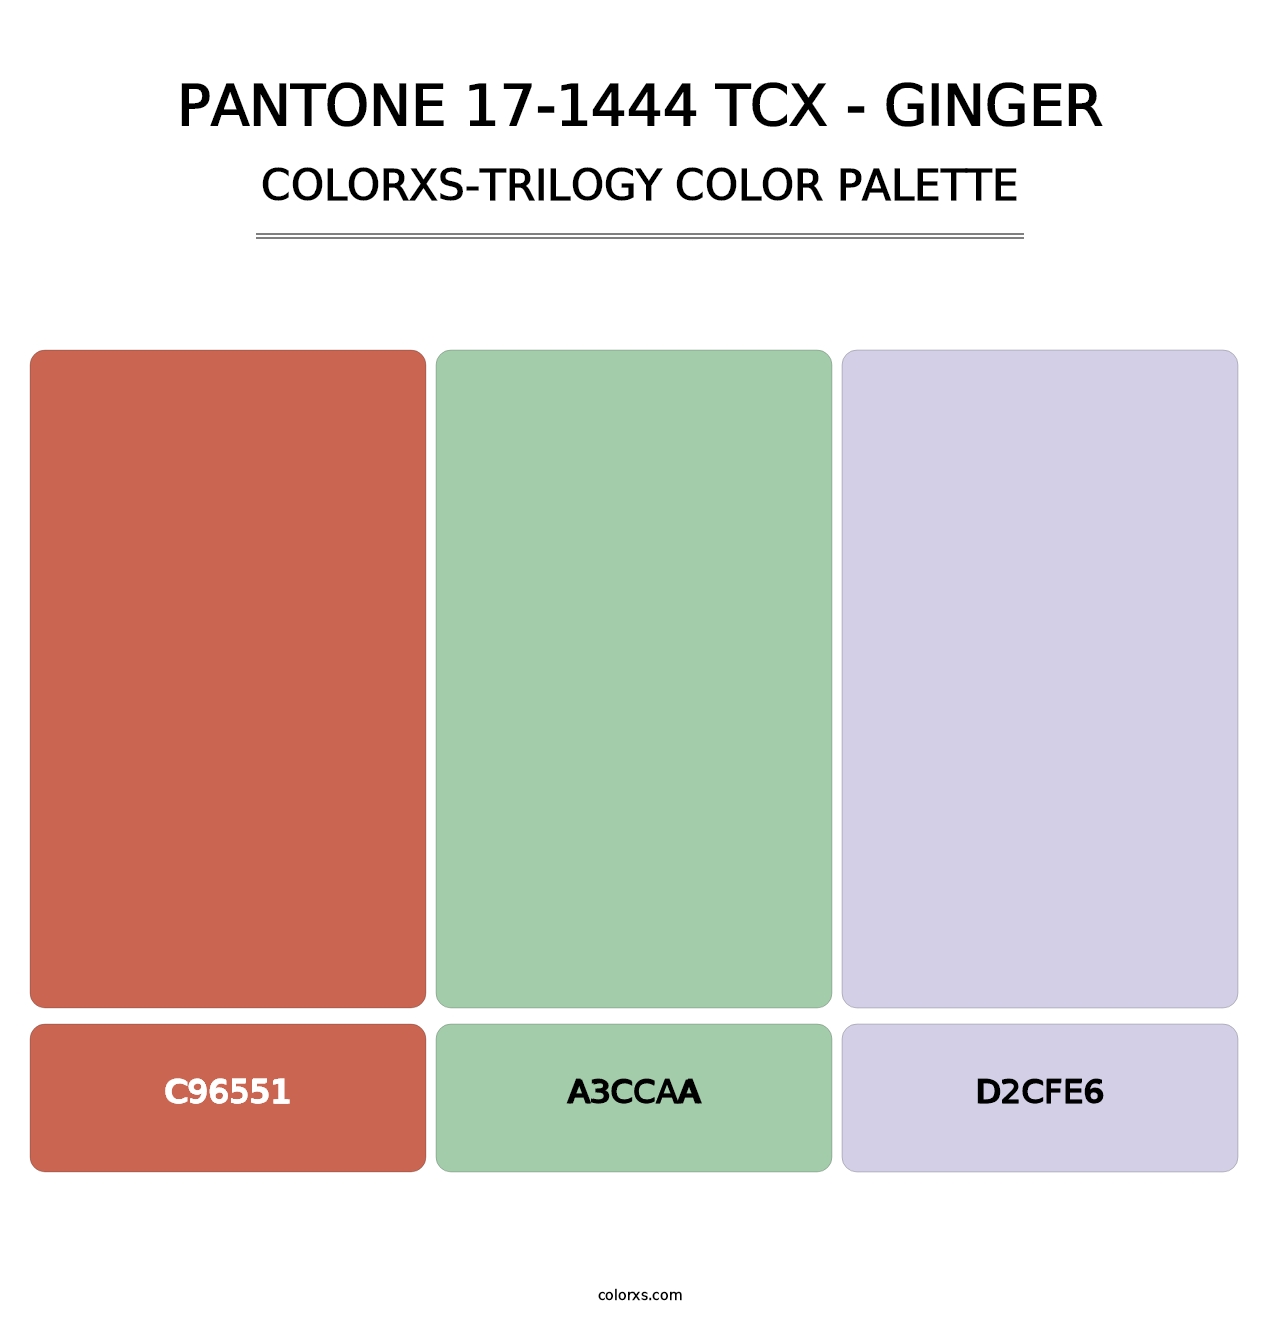 PANTONE 17-1444 TCX - Ginger - Colorxs Trilogy Palette